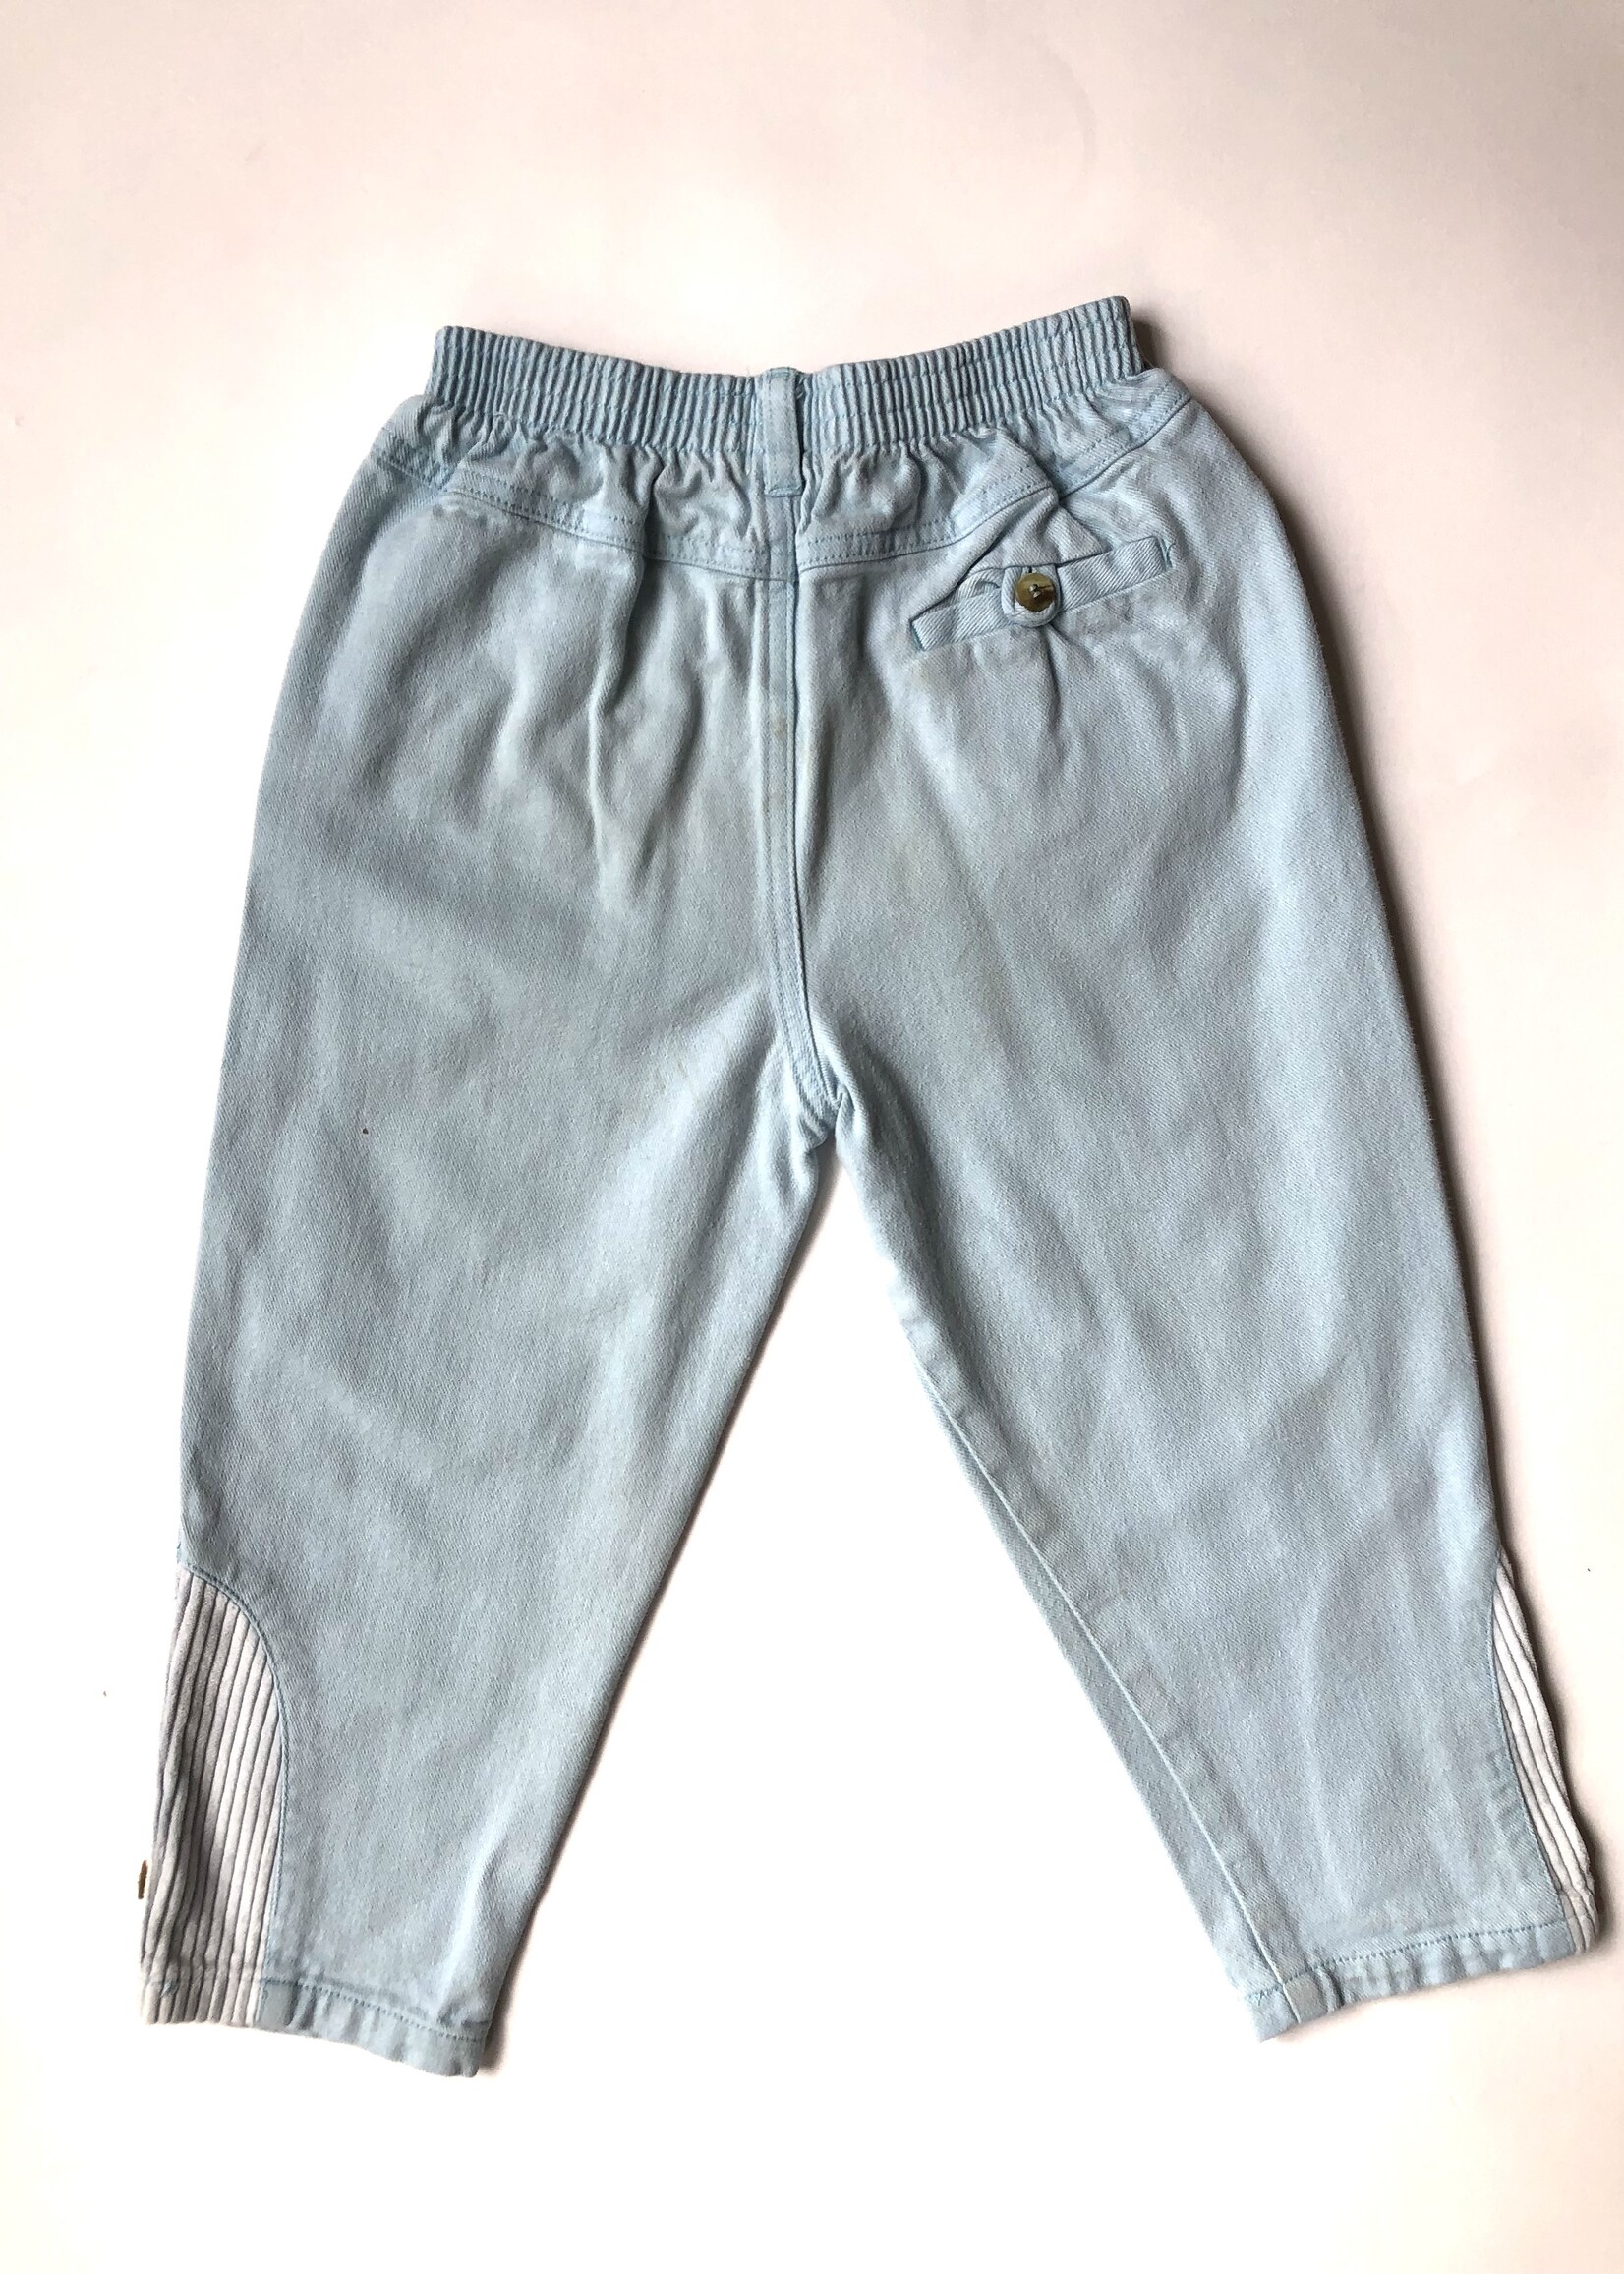 Vintage Light blue denim puffy pants 4y